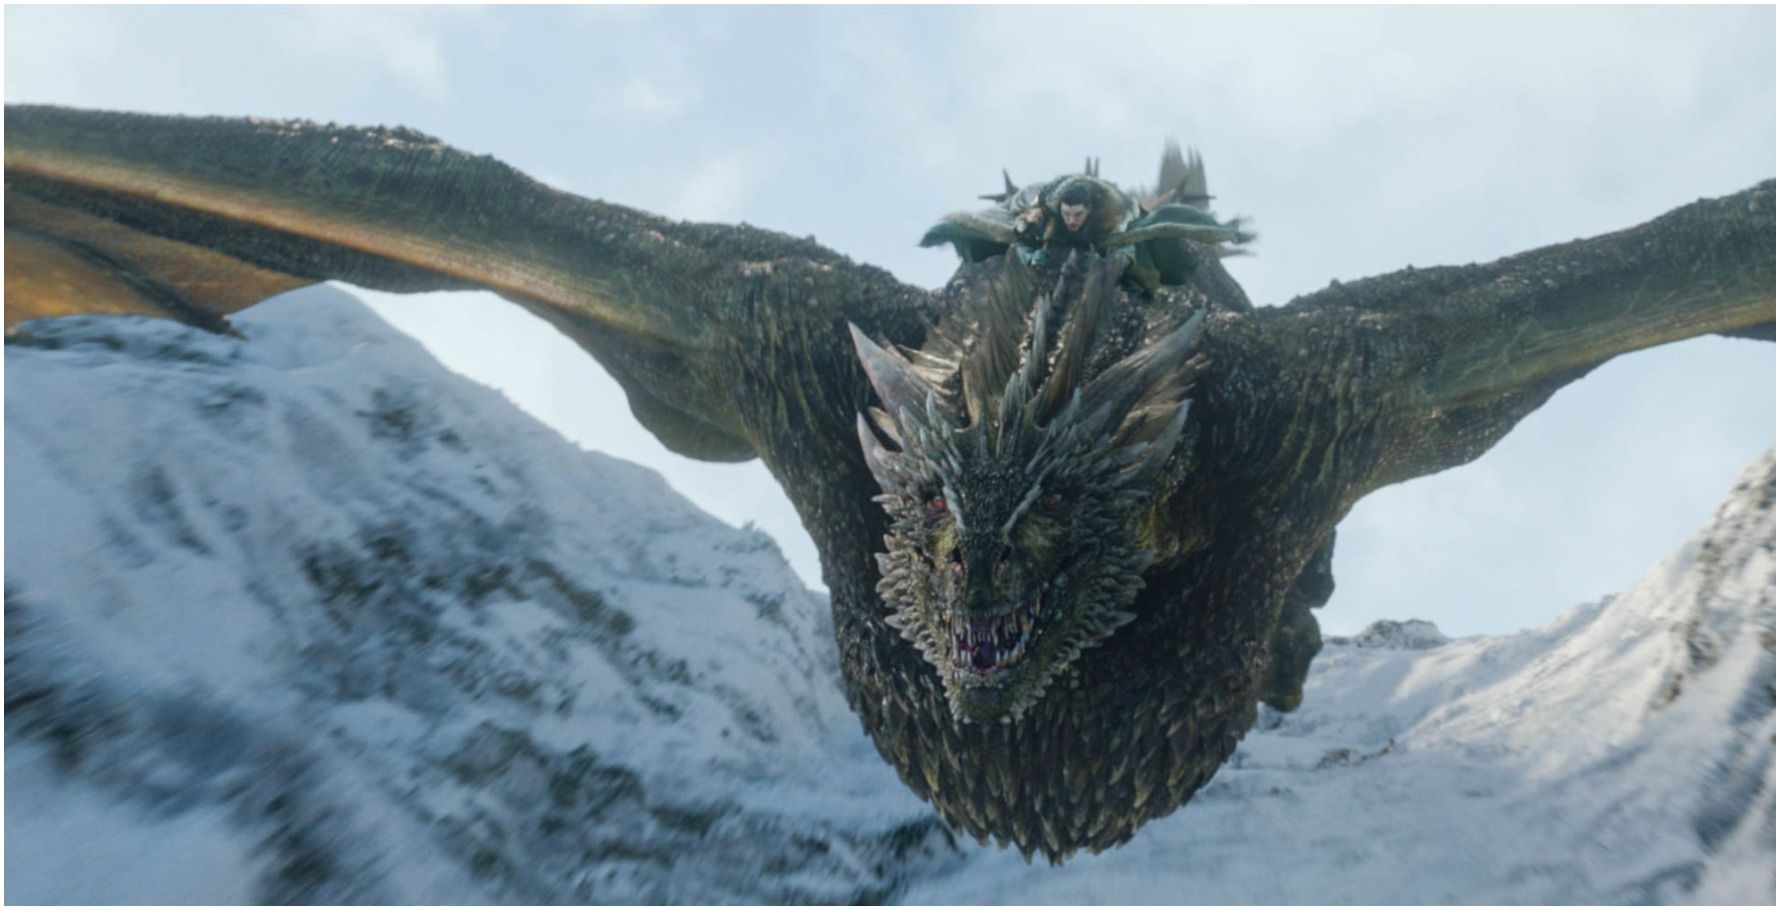 Rhaegal flying with Jon Snow